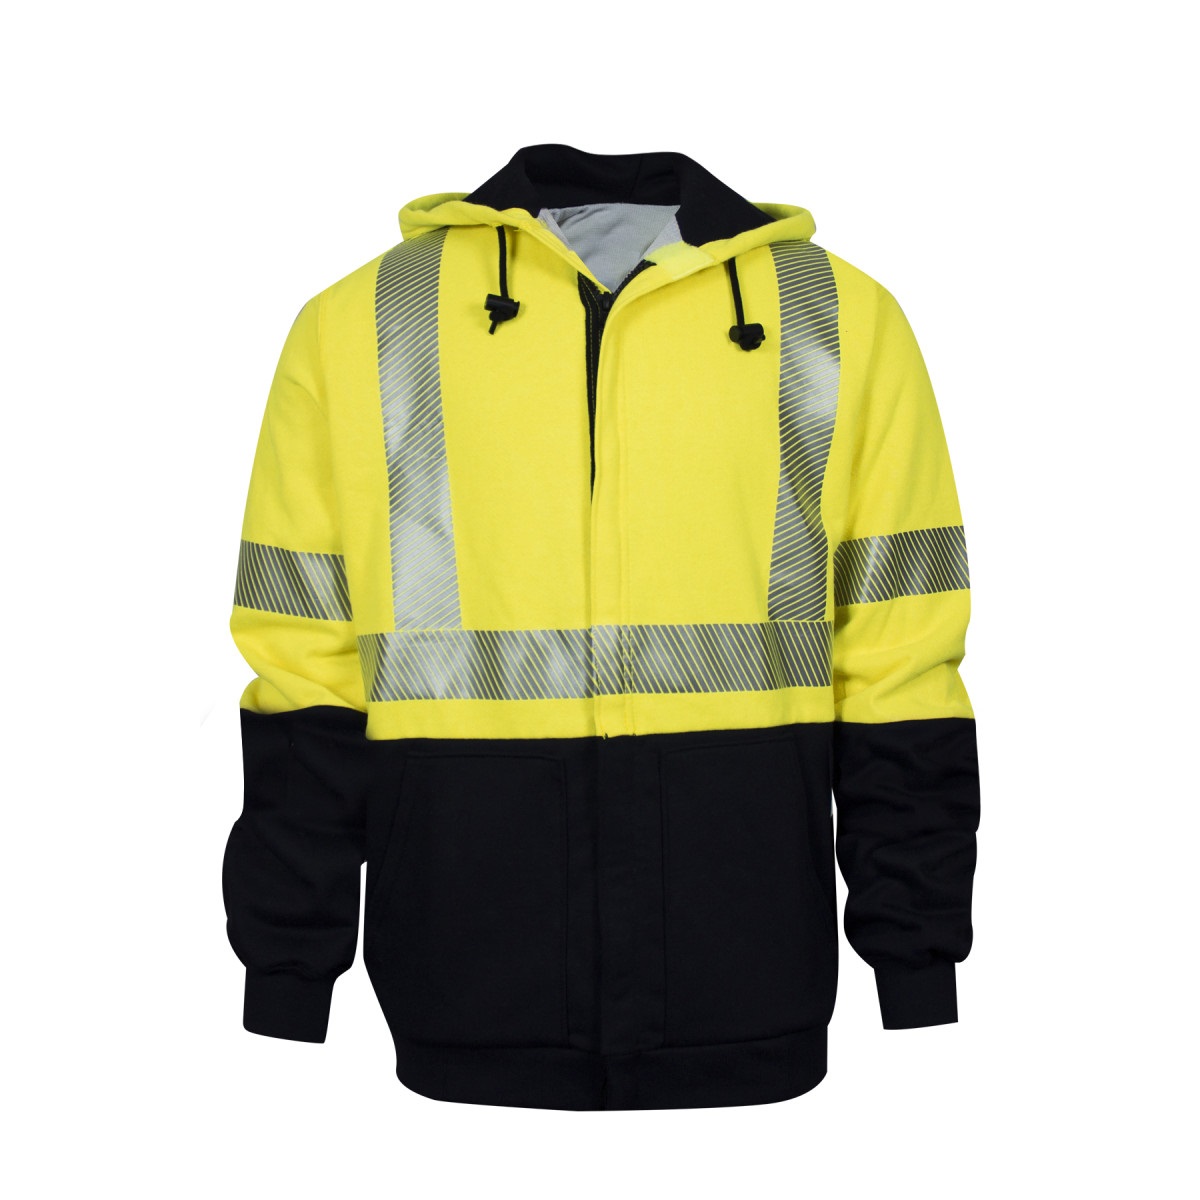 NSA Hi-Vis Deluxe Hybrid Hooded Sweatshirt with Liner in Navy Fluorescent Yellow